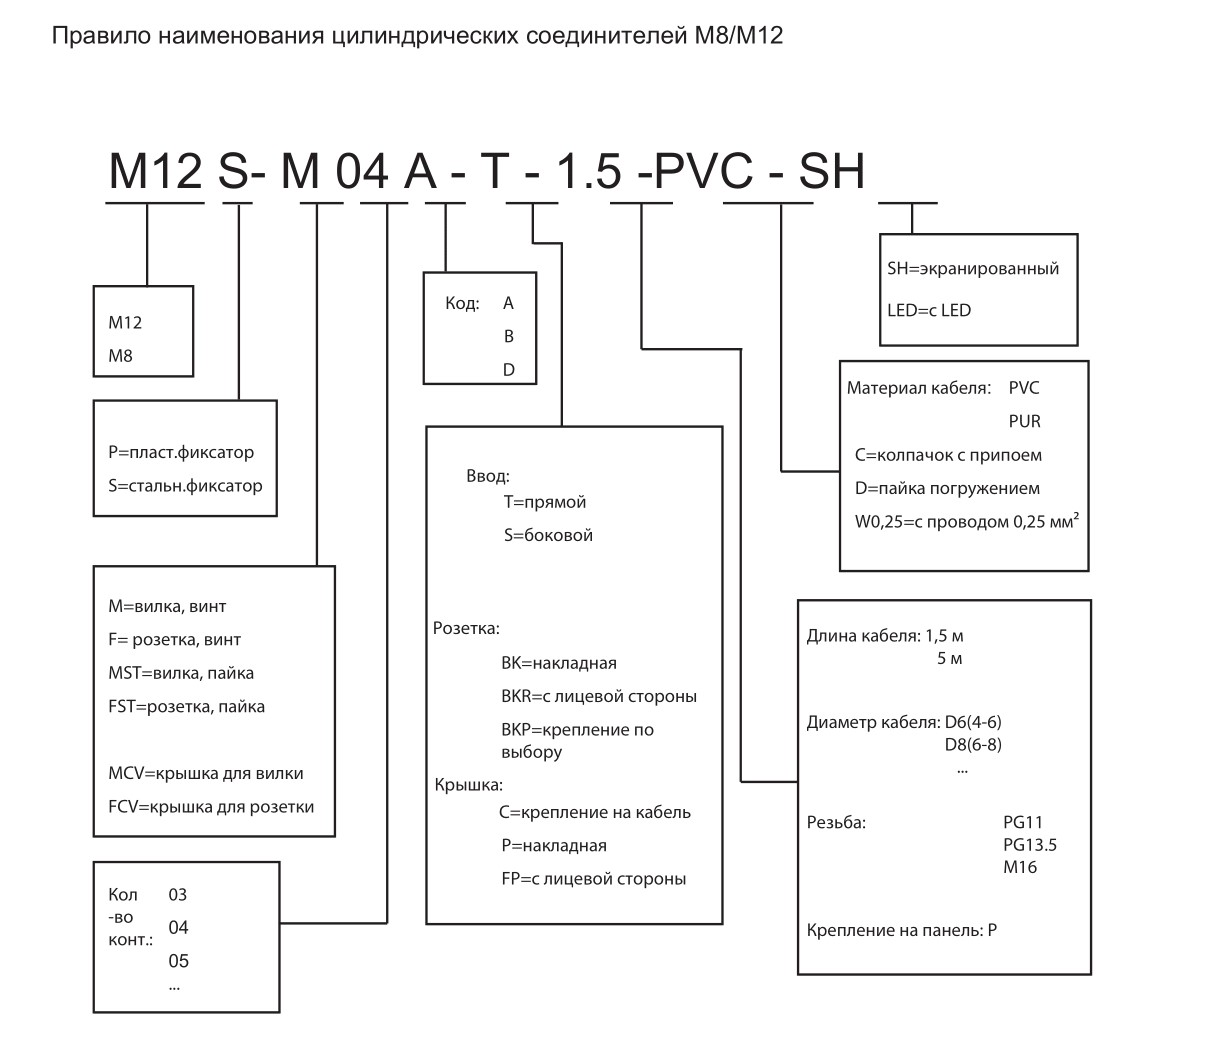 Цилиндрический соединитель-розетка с кабелем M12-F04D-BK-PG9-PFN 1630043024022: Структура обозначения